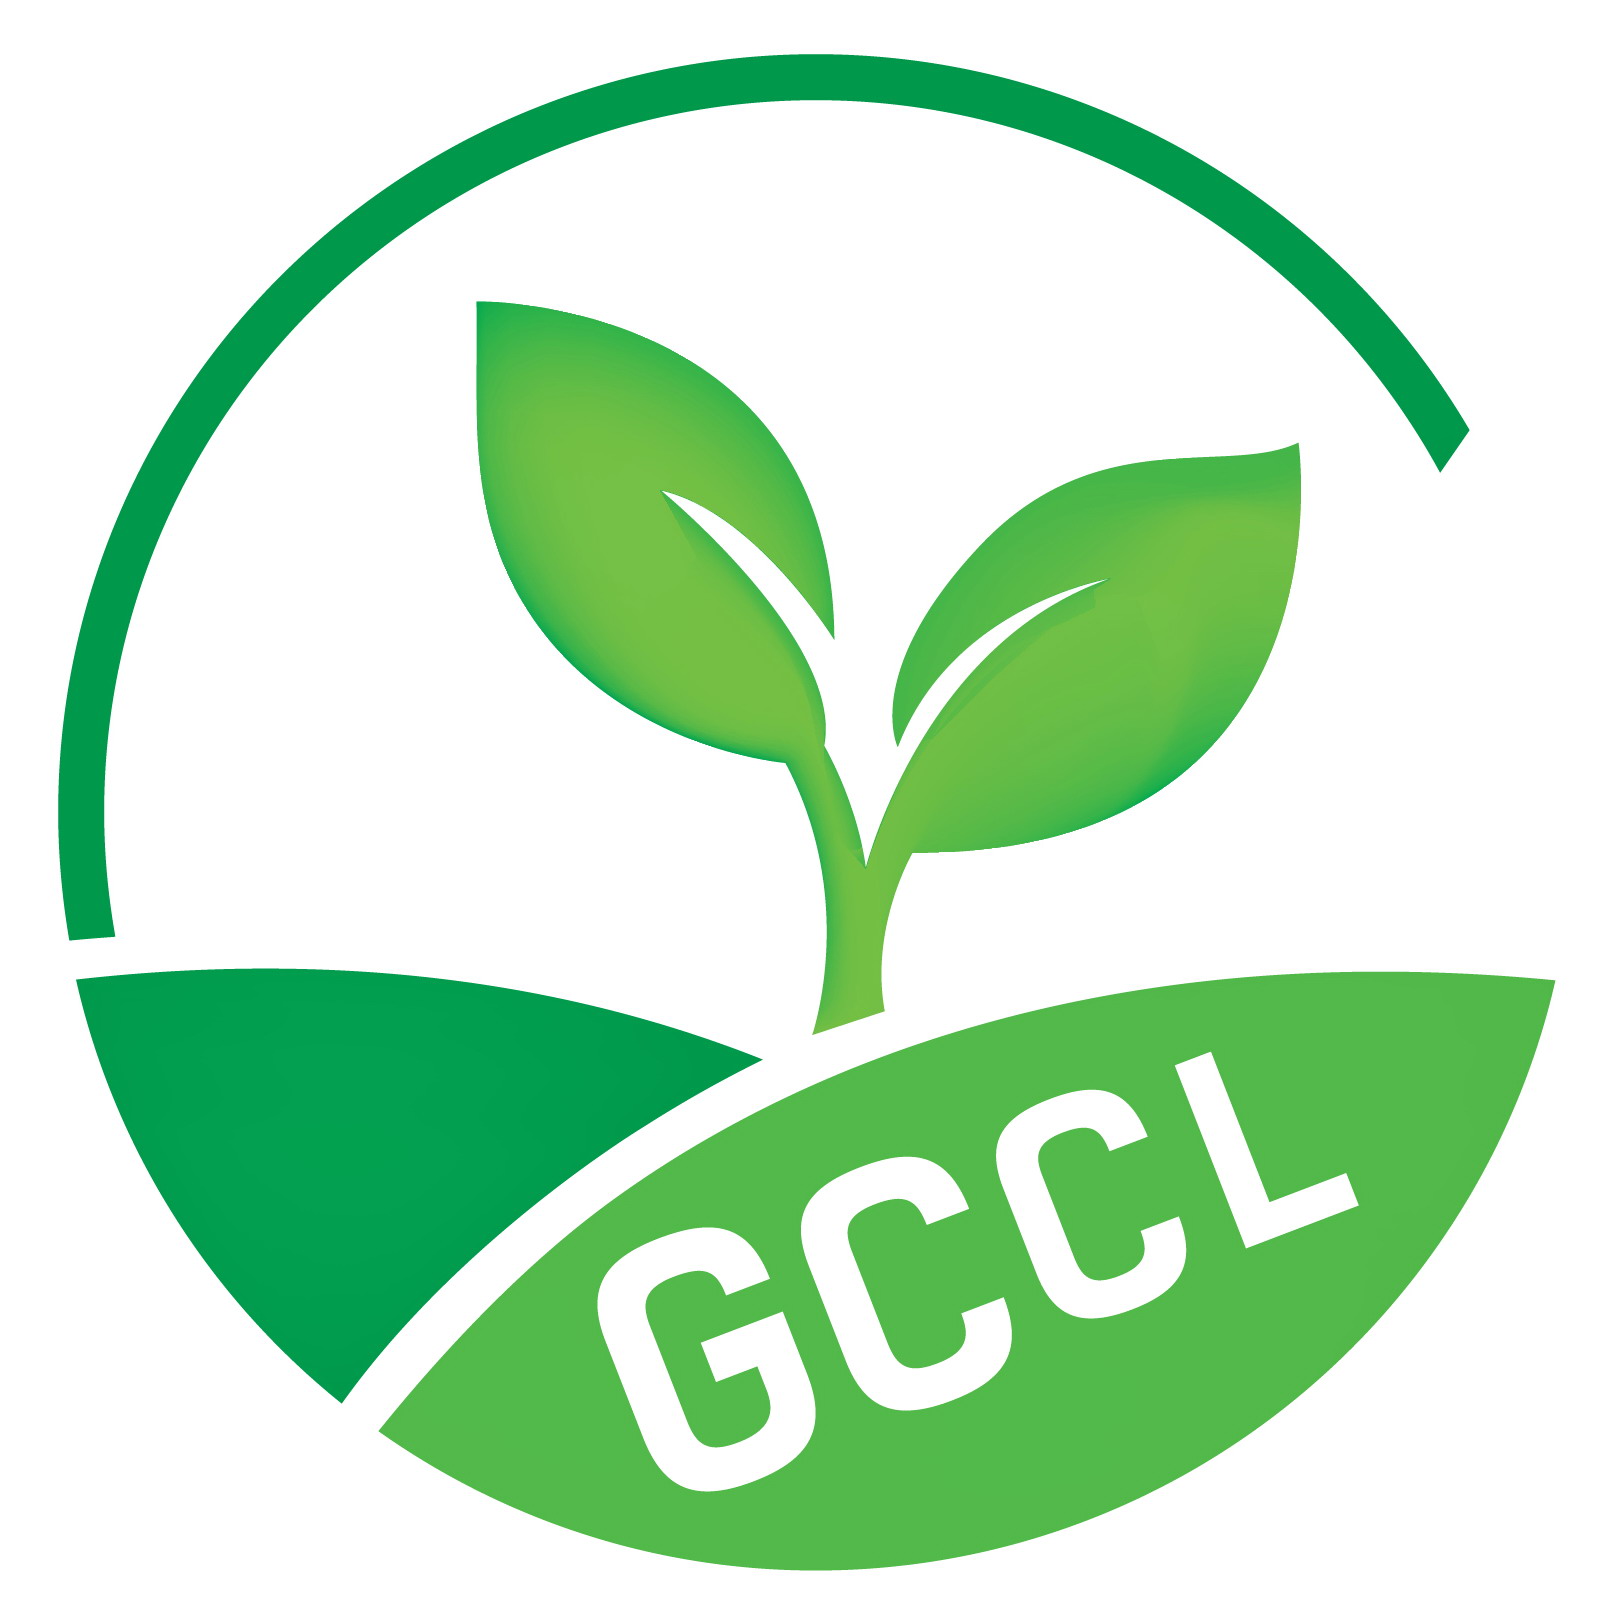 GCCL Logo New